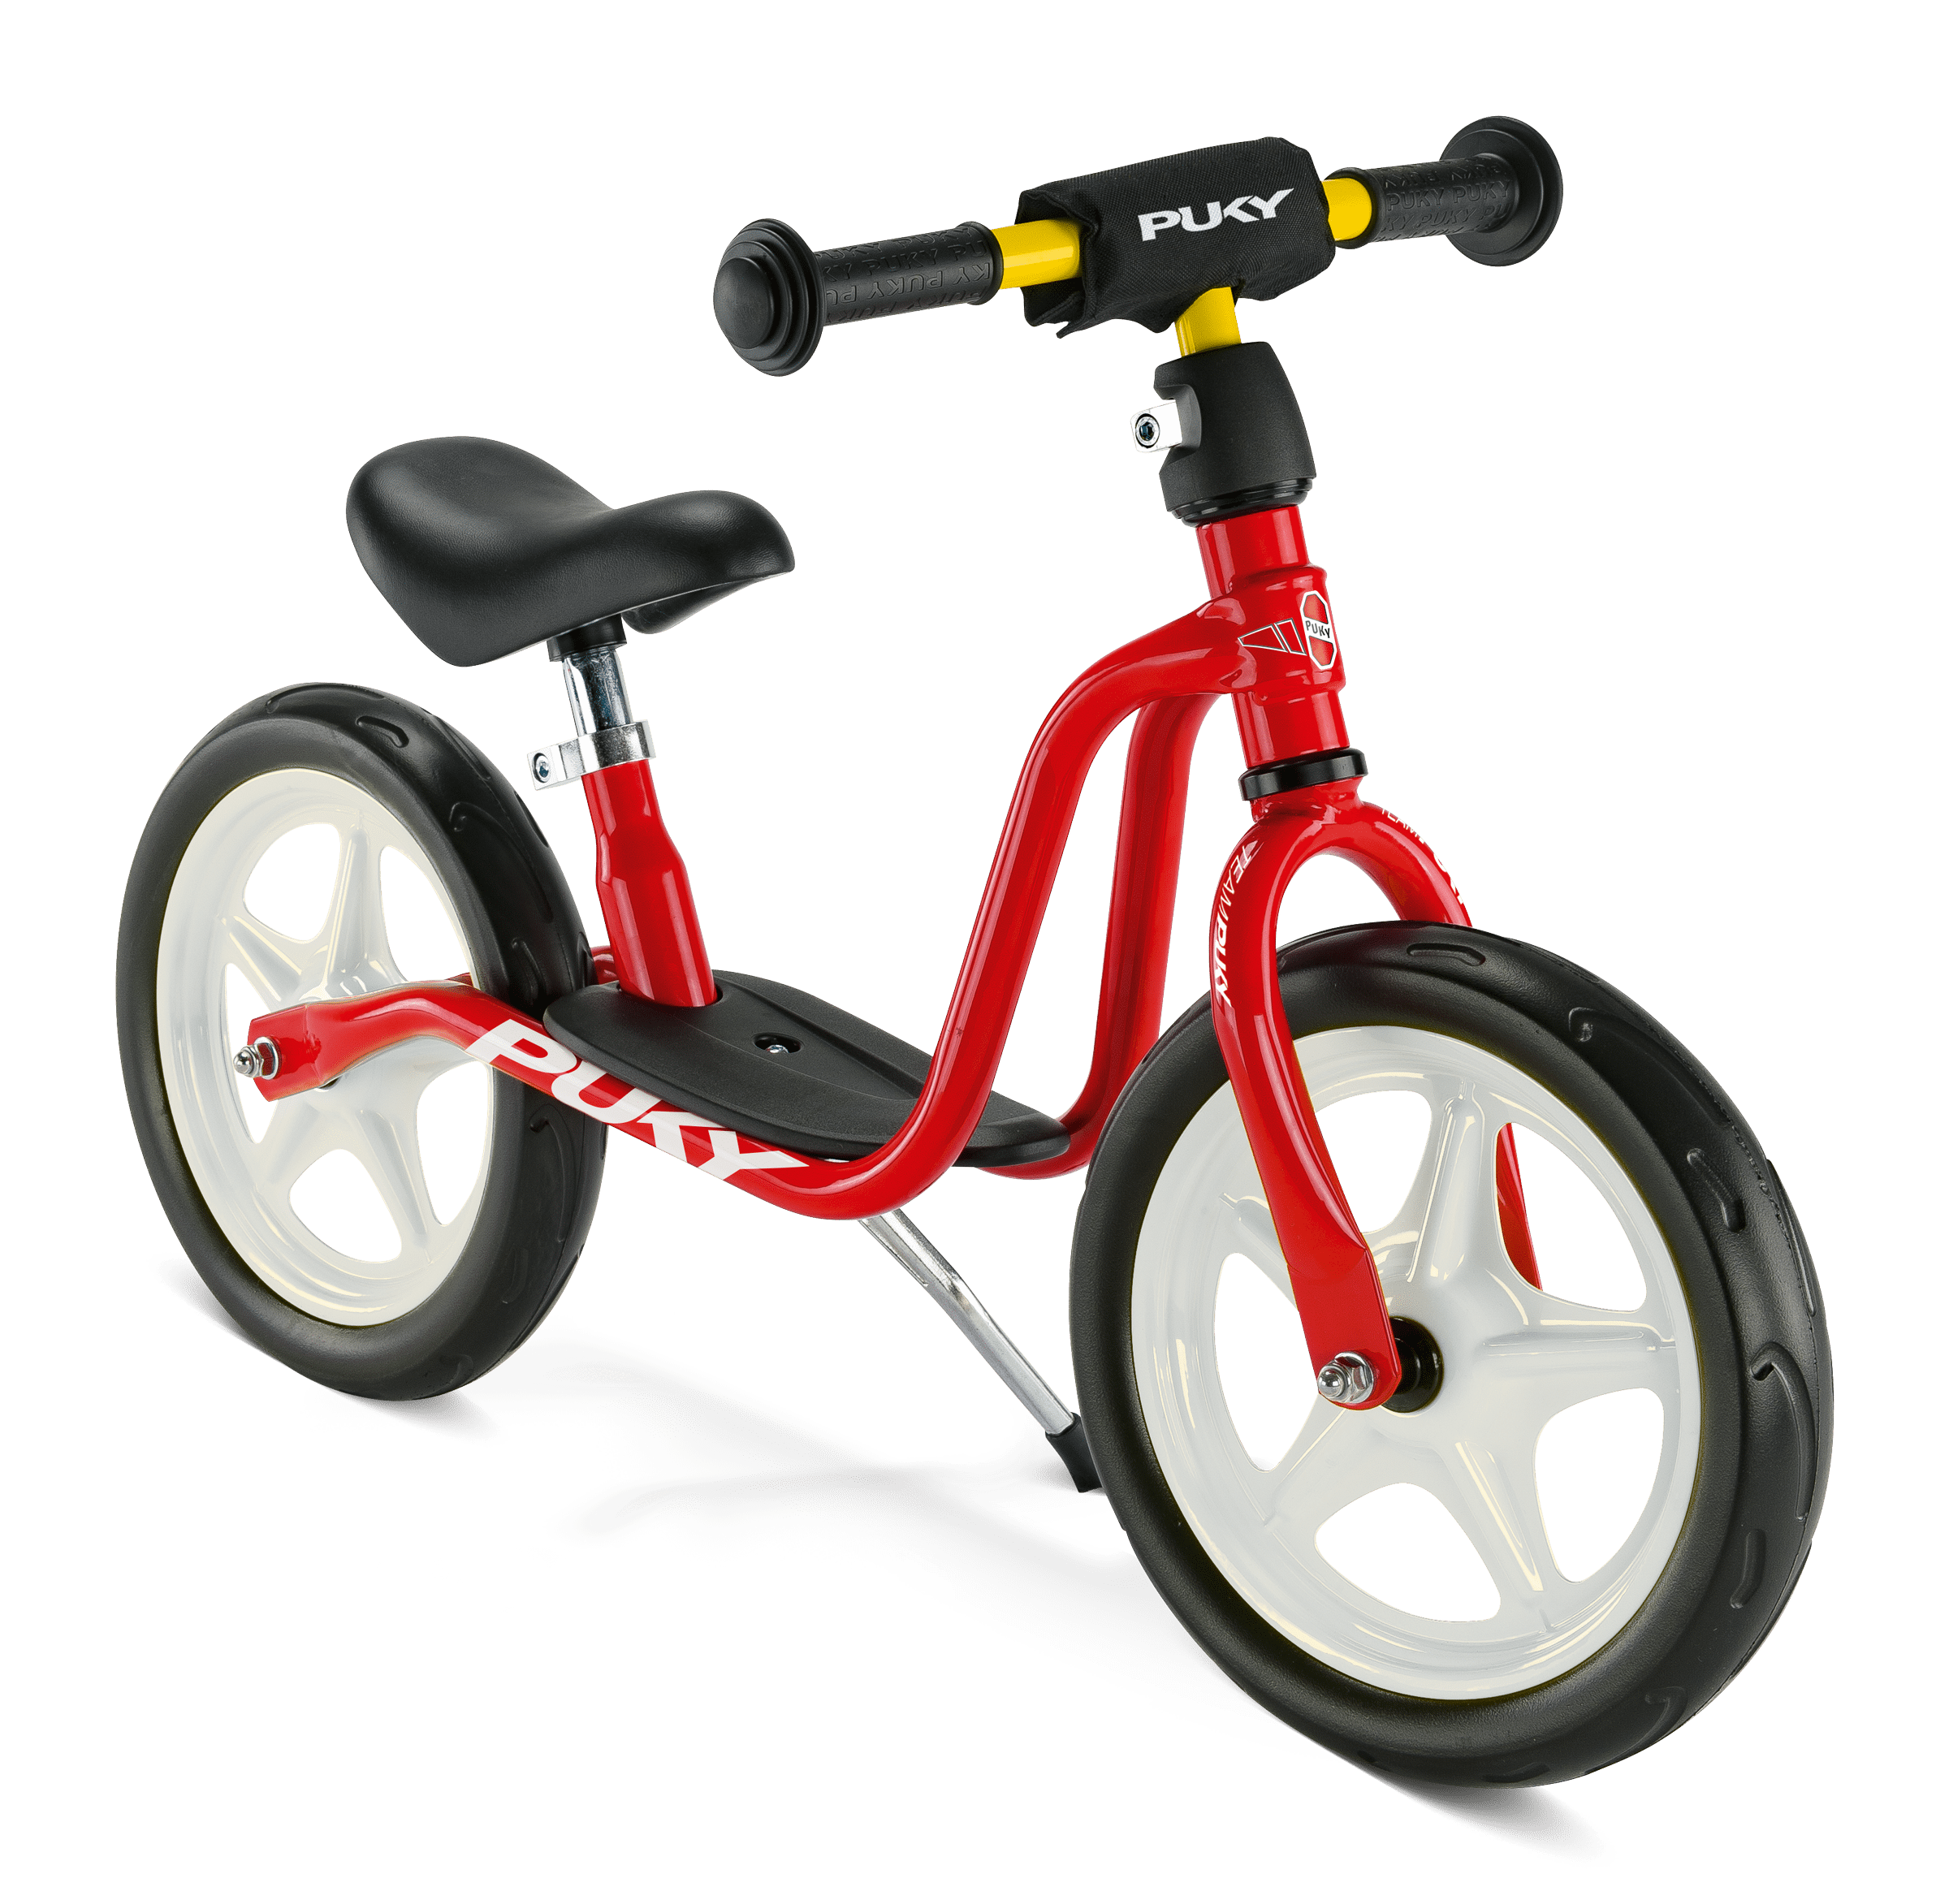 PUKY ® Cesta para bicicleta infantil Chaos S 